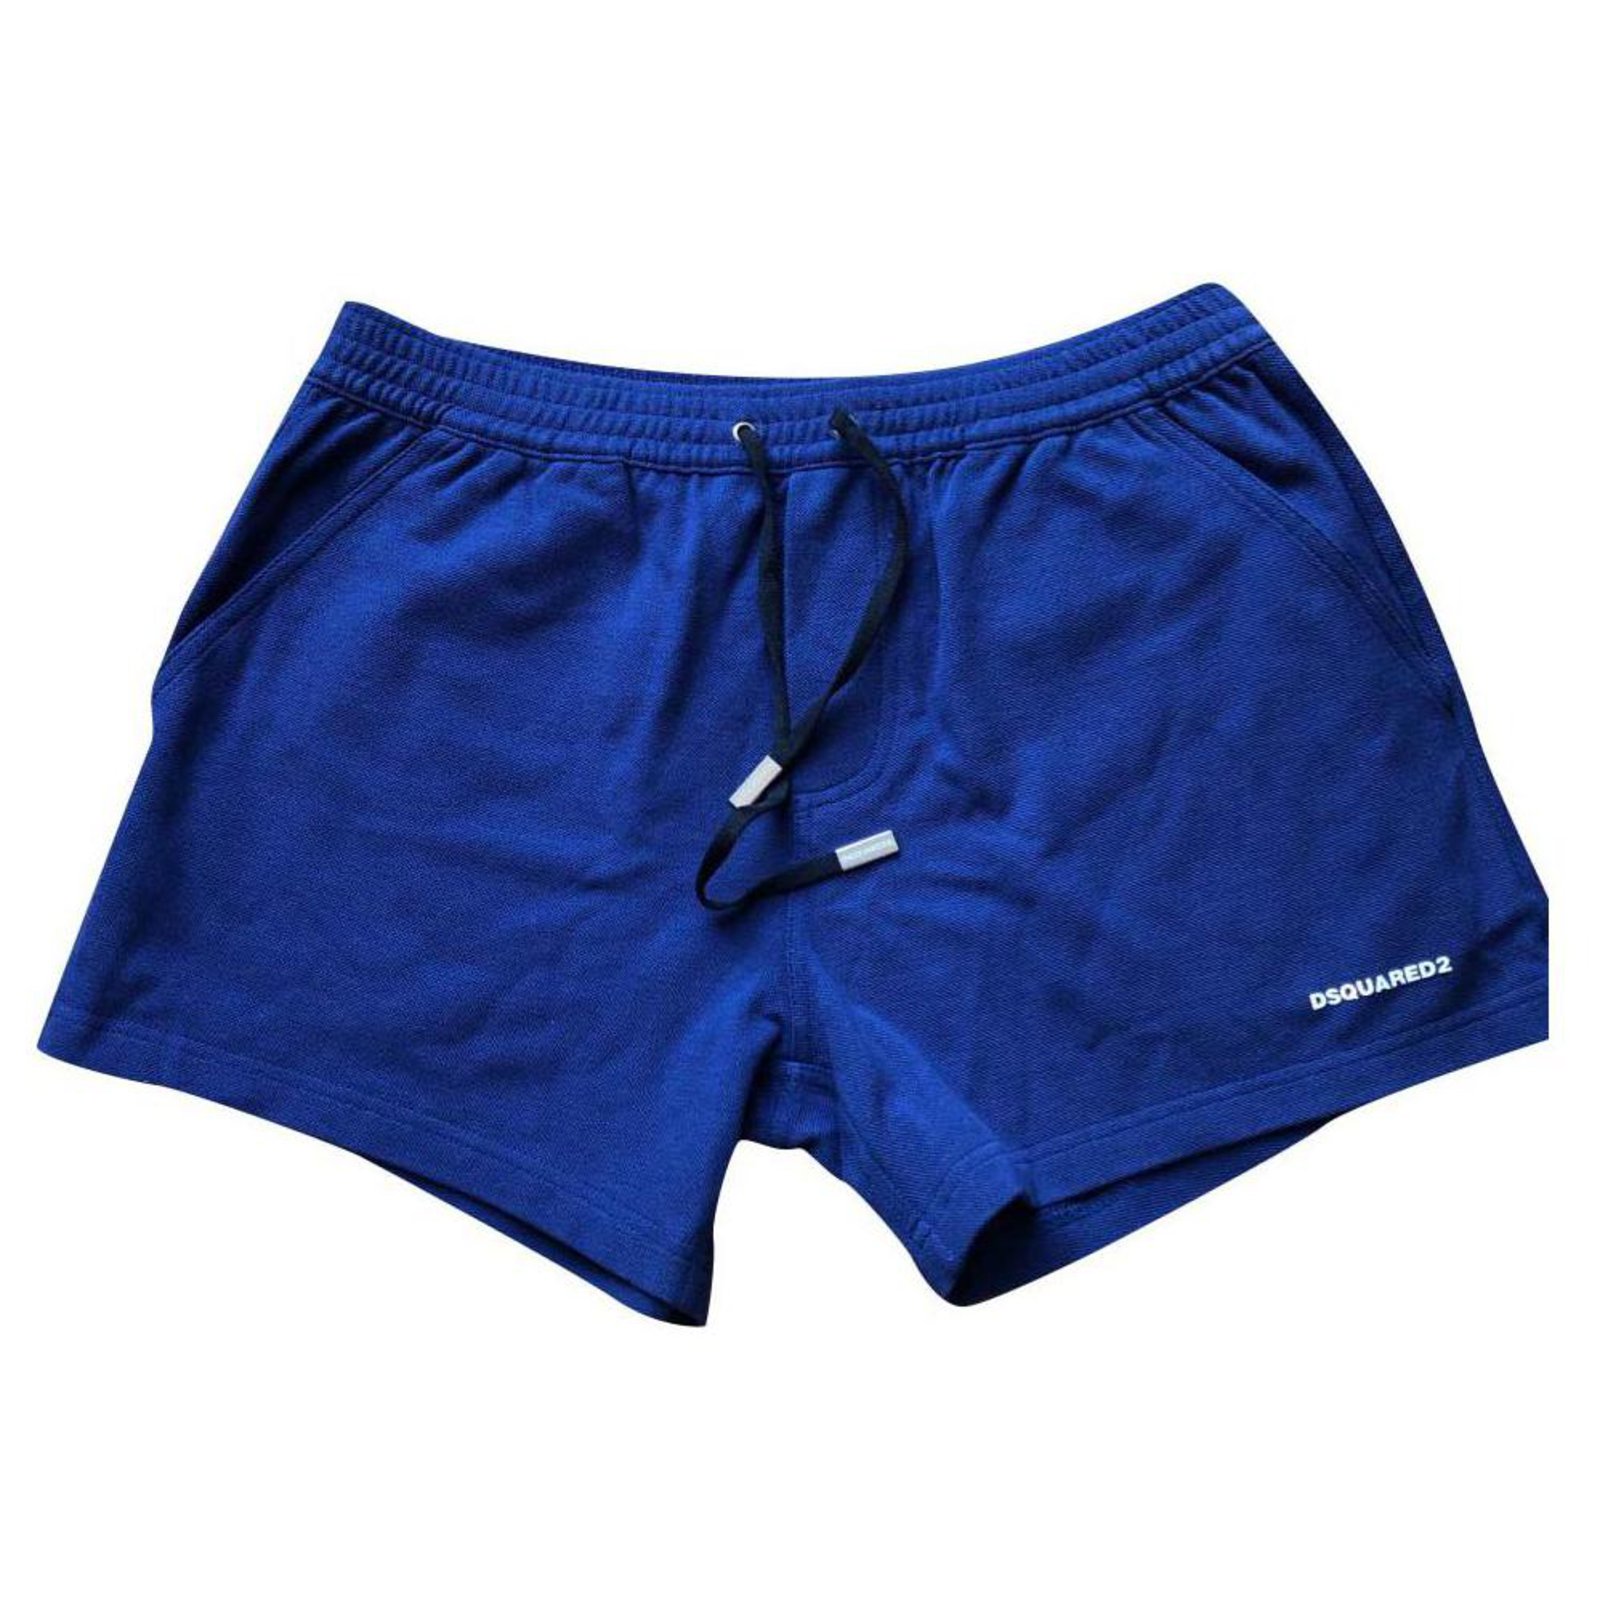 dsquared2 men's shorts